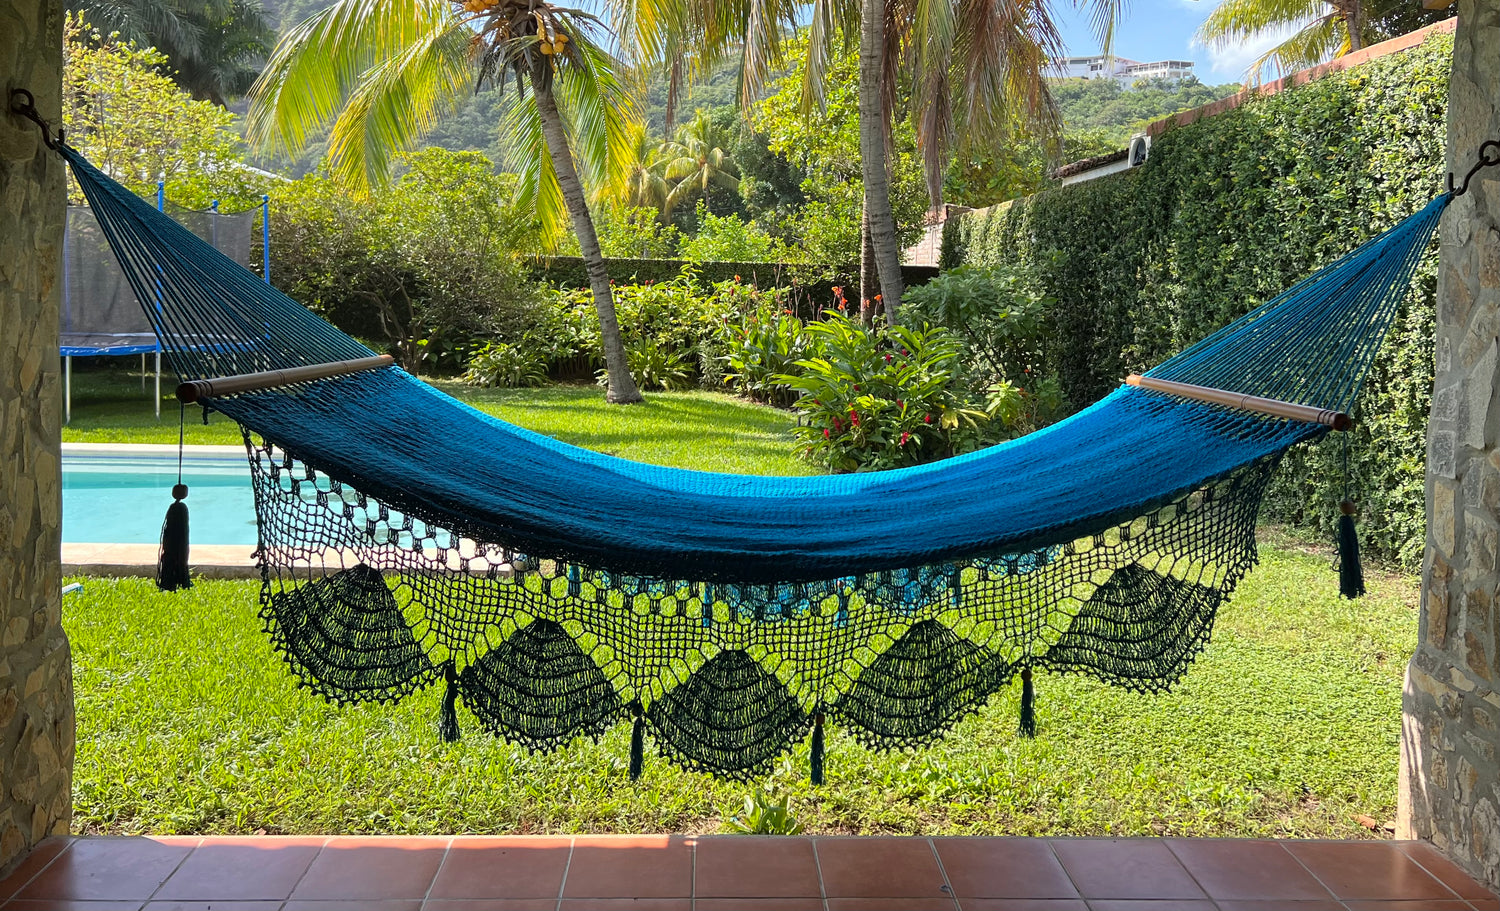 king size hammocks